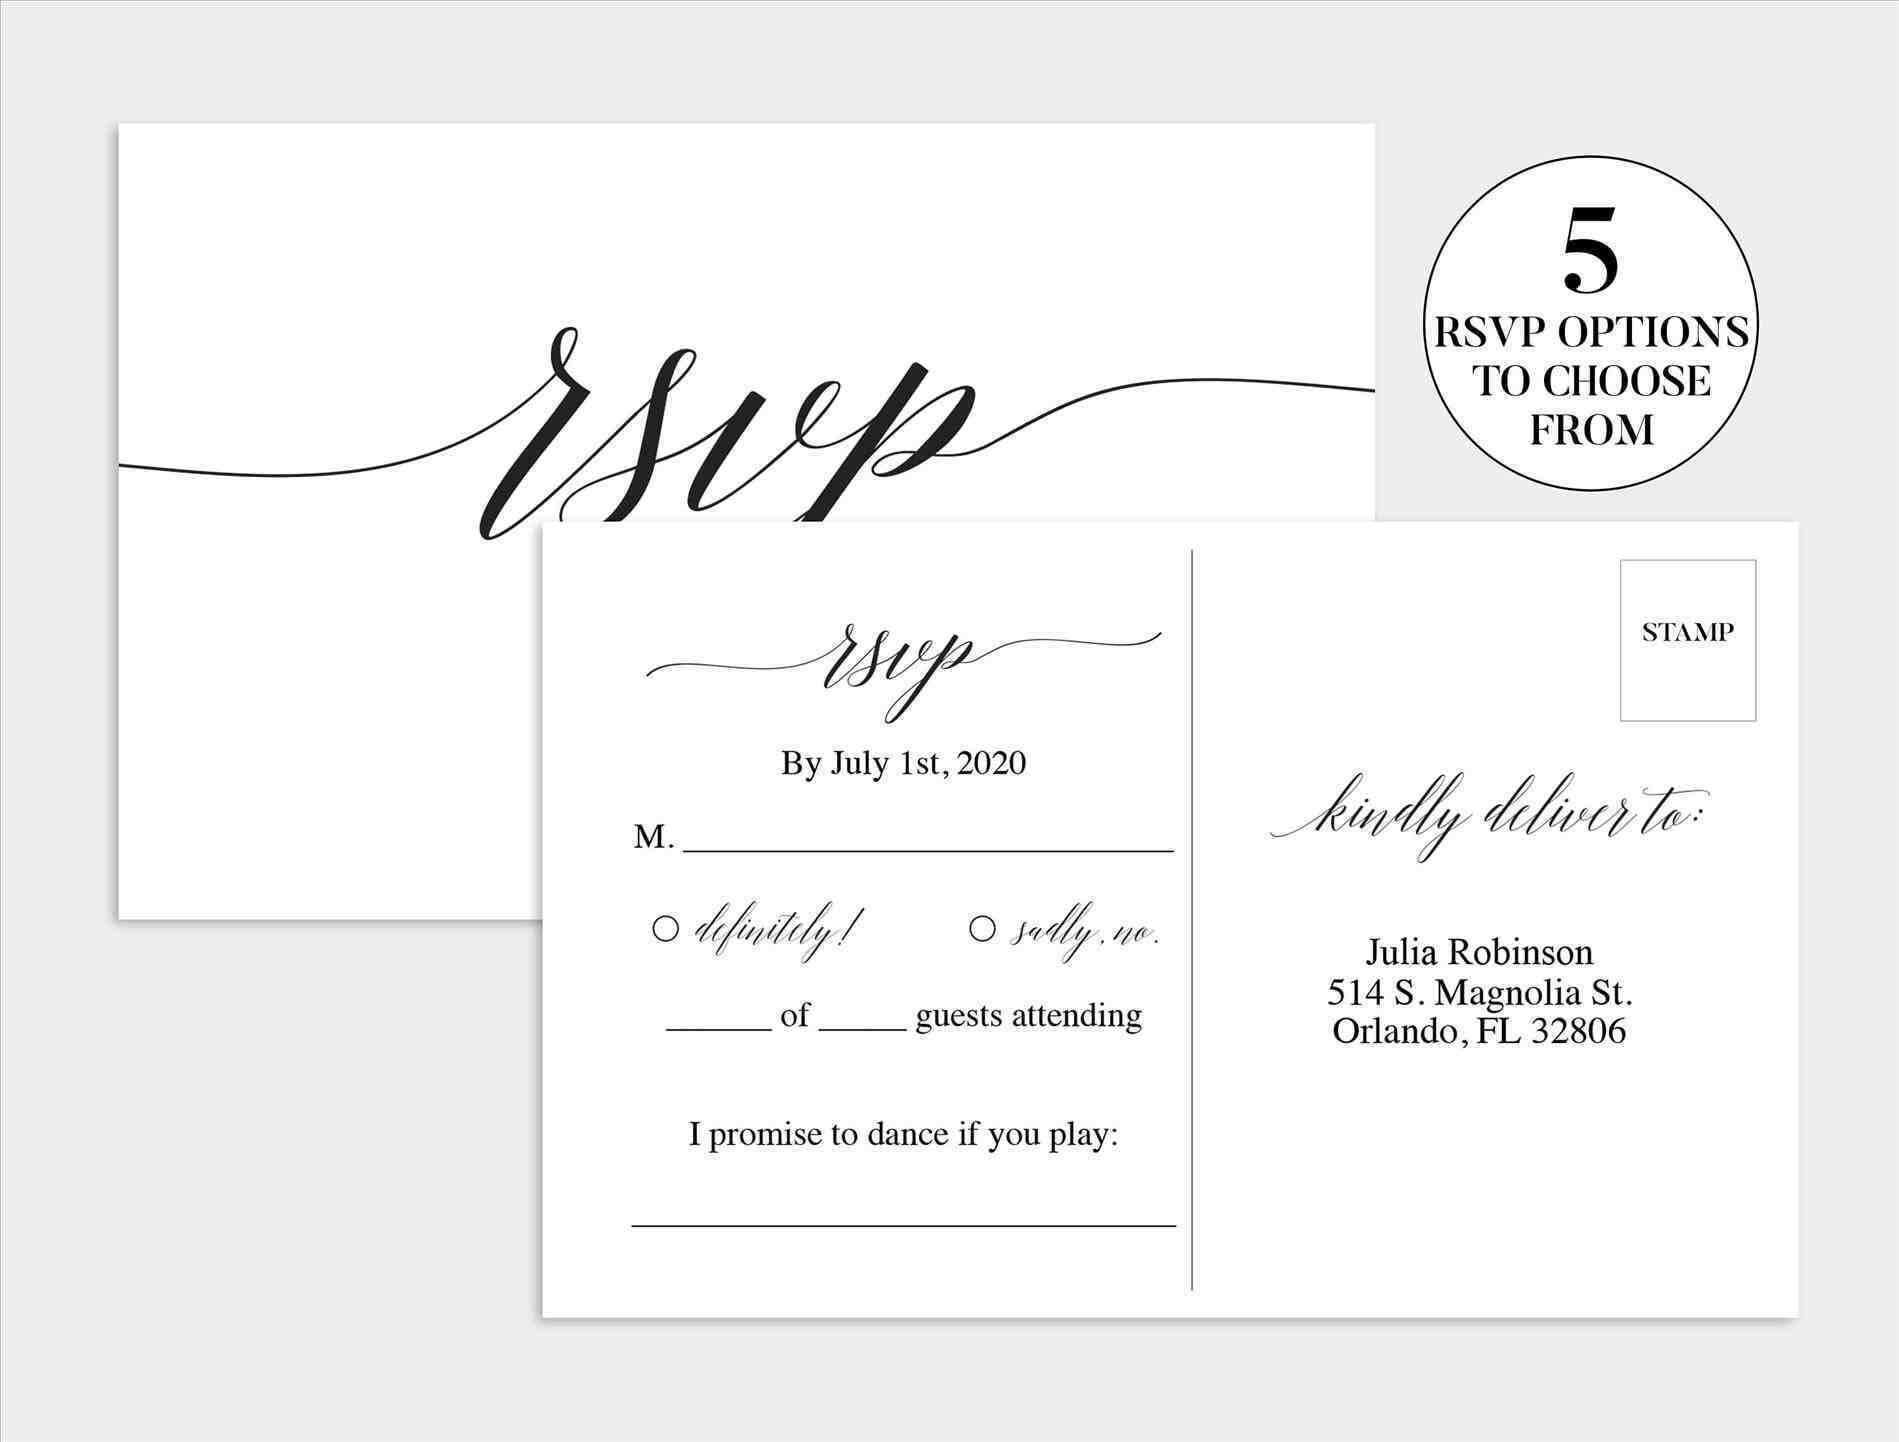 Pinjoanna Keysa On Free Tamplate | Wedding Reply Cards Within Free Printable Wedding Rsvp Card Templates